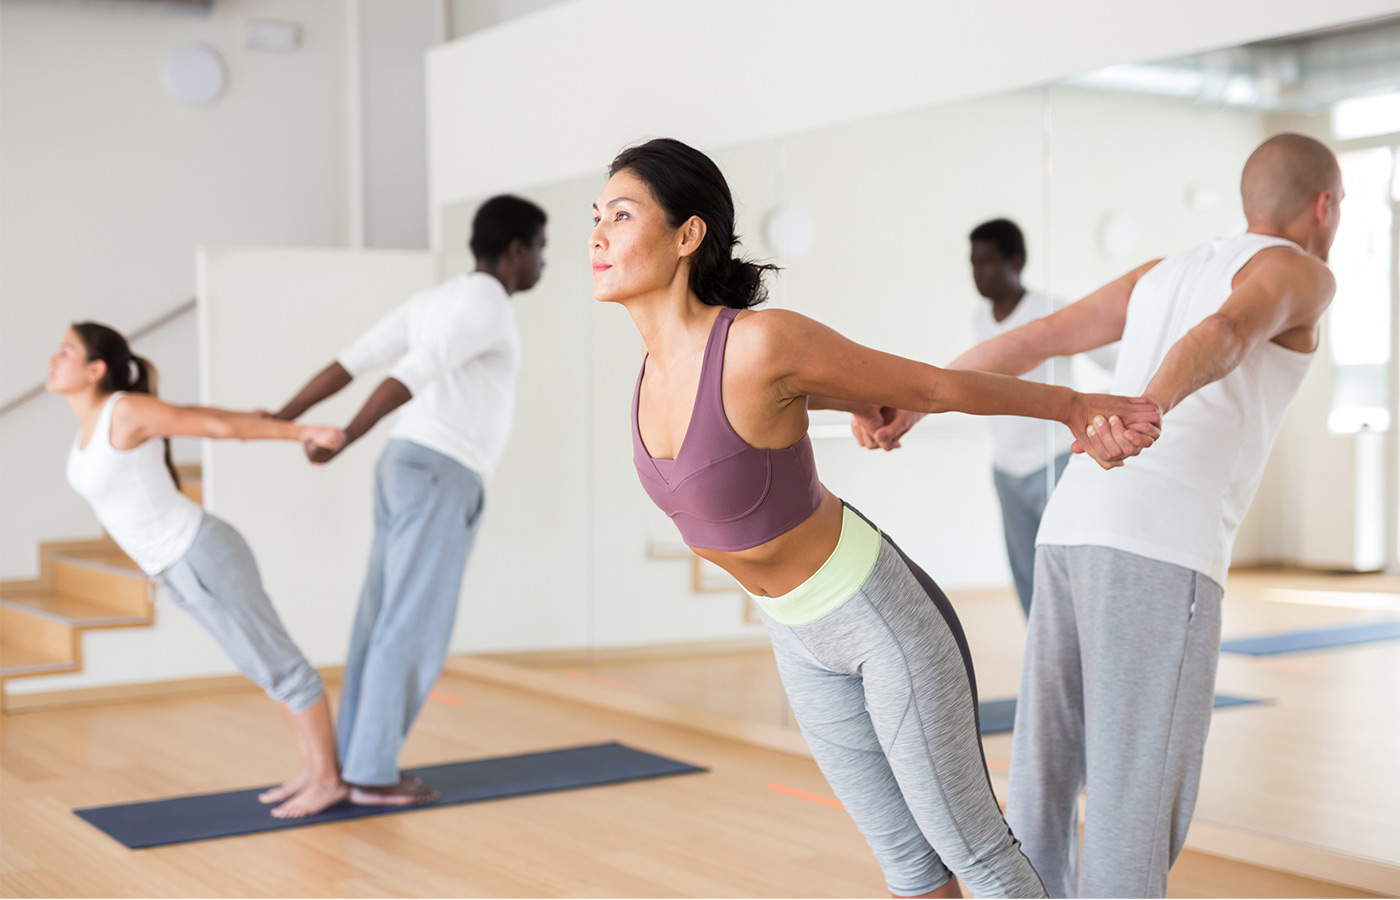 People in a yoga studio.